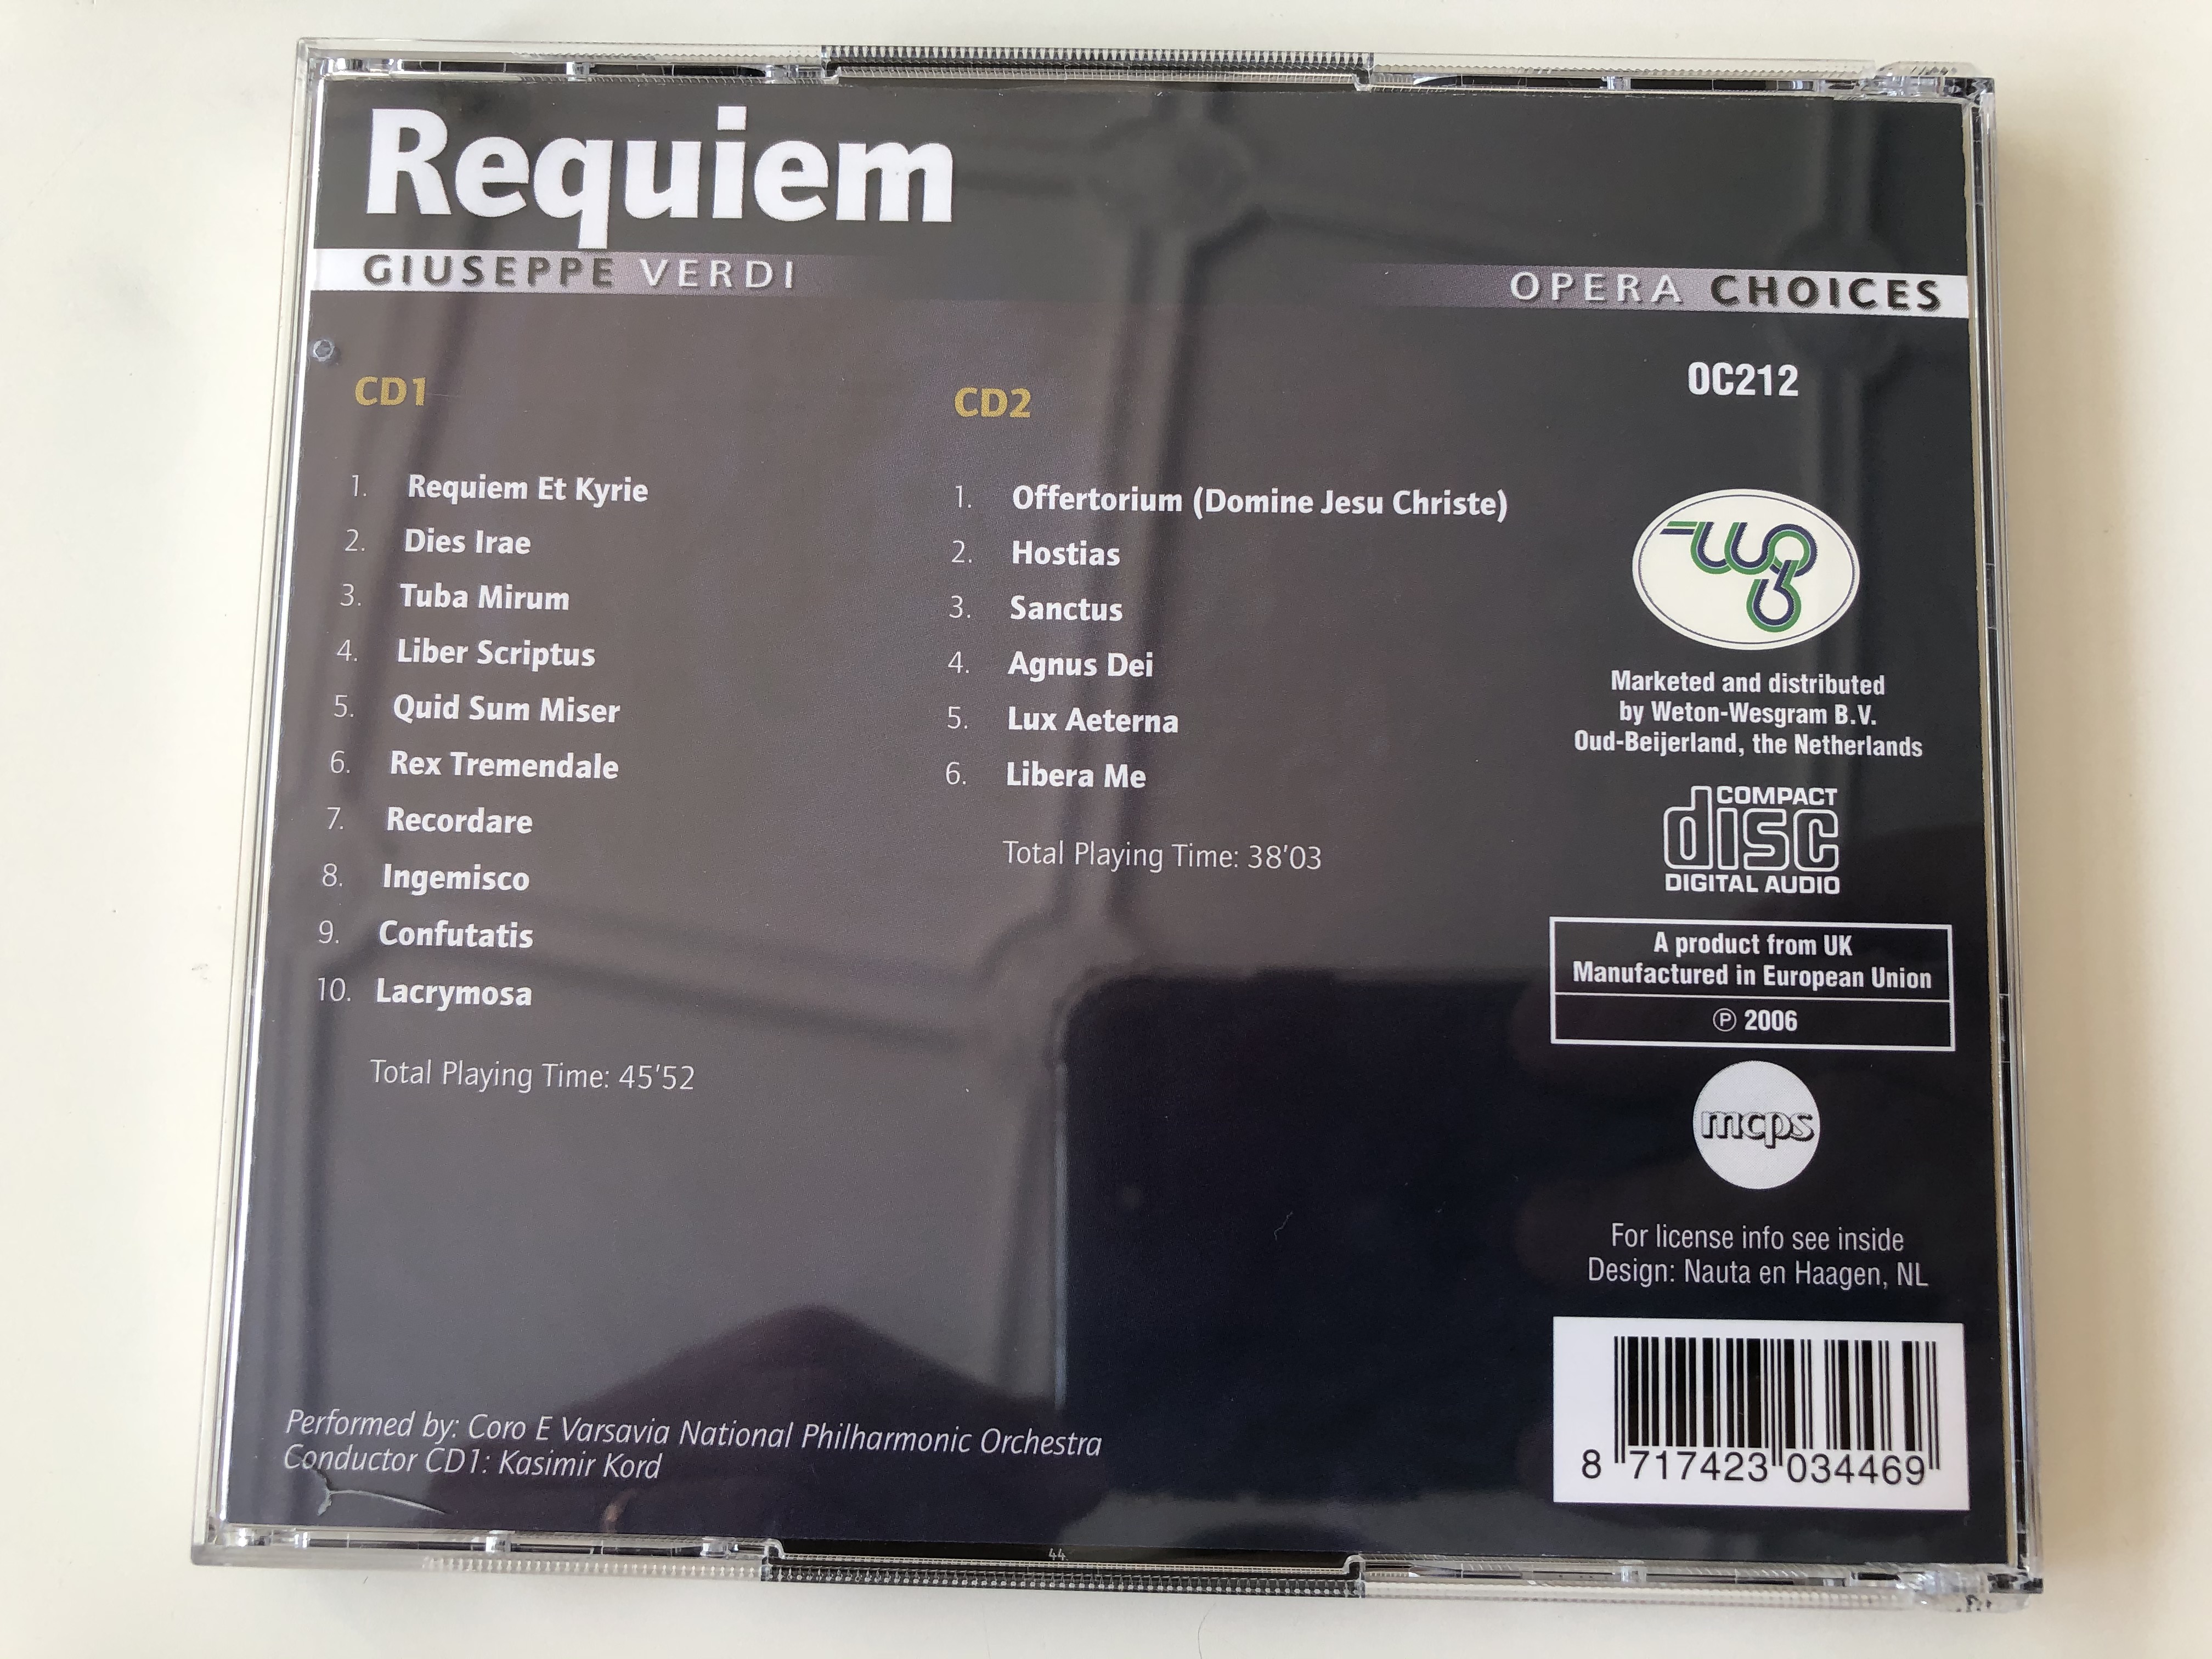 requiem-giuseppe-verdi-coro-e-varsavia-national-philharmonic-orchestra-conductor-kasimir-kord-opera-choices-2x-audio-cd-2006-oc212-5-.jpg